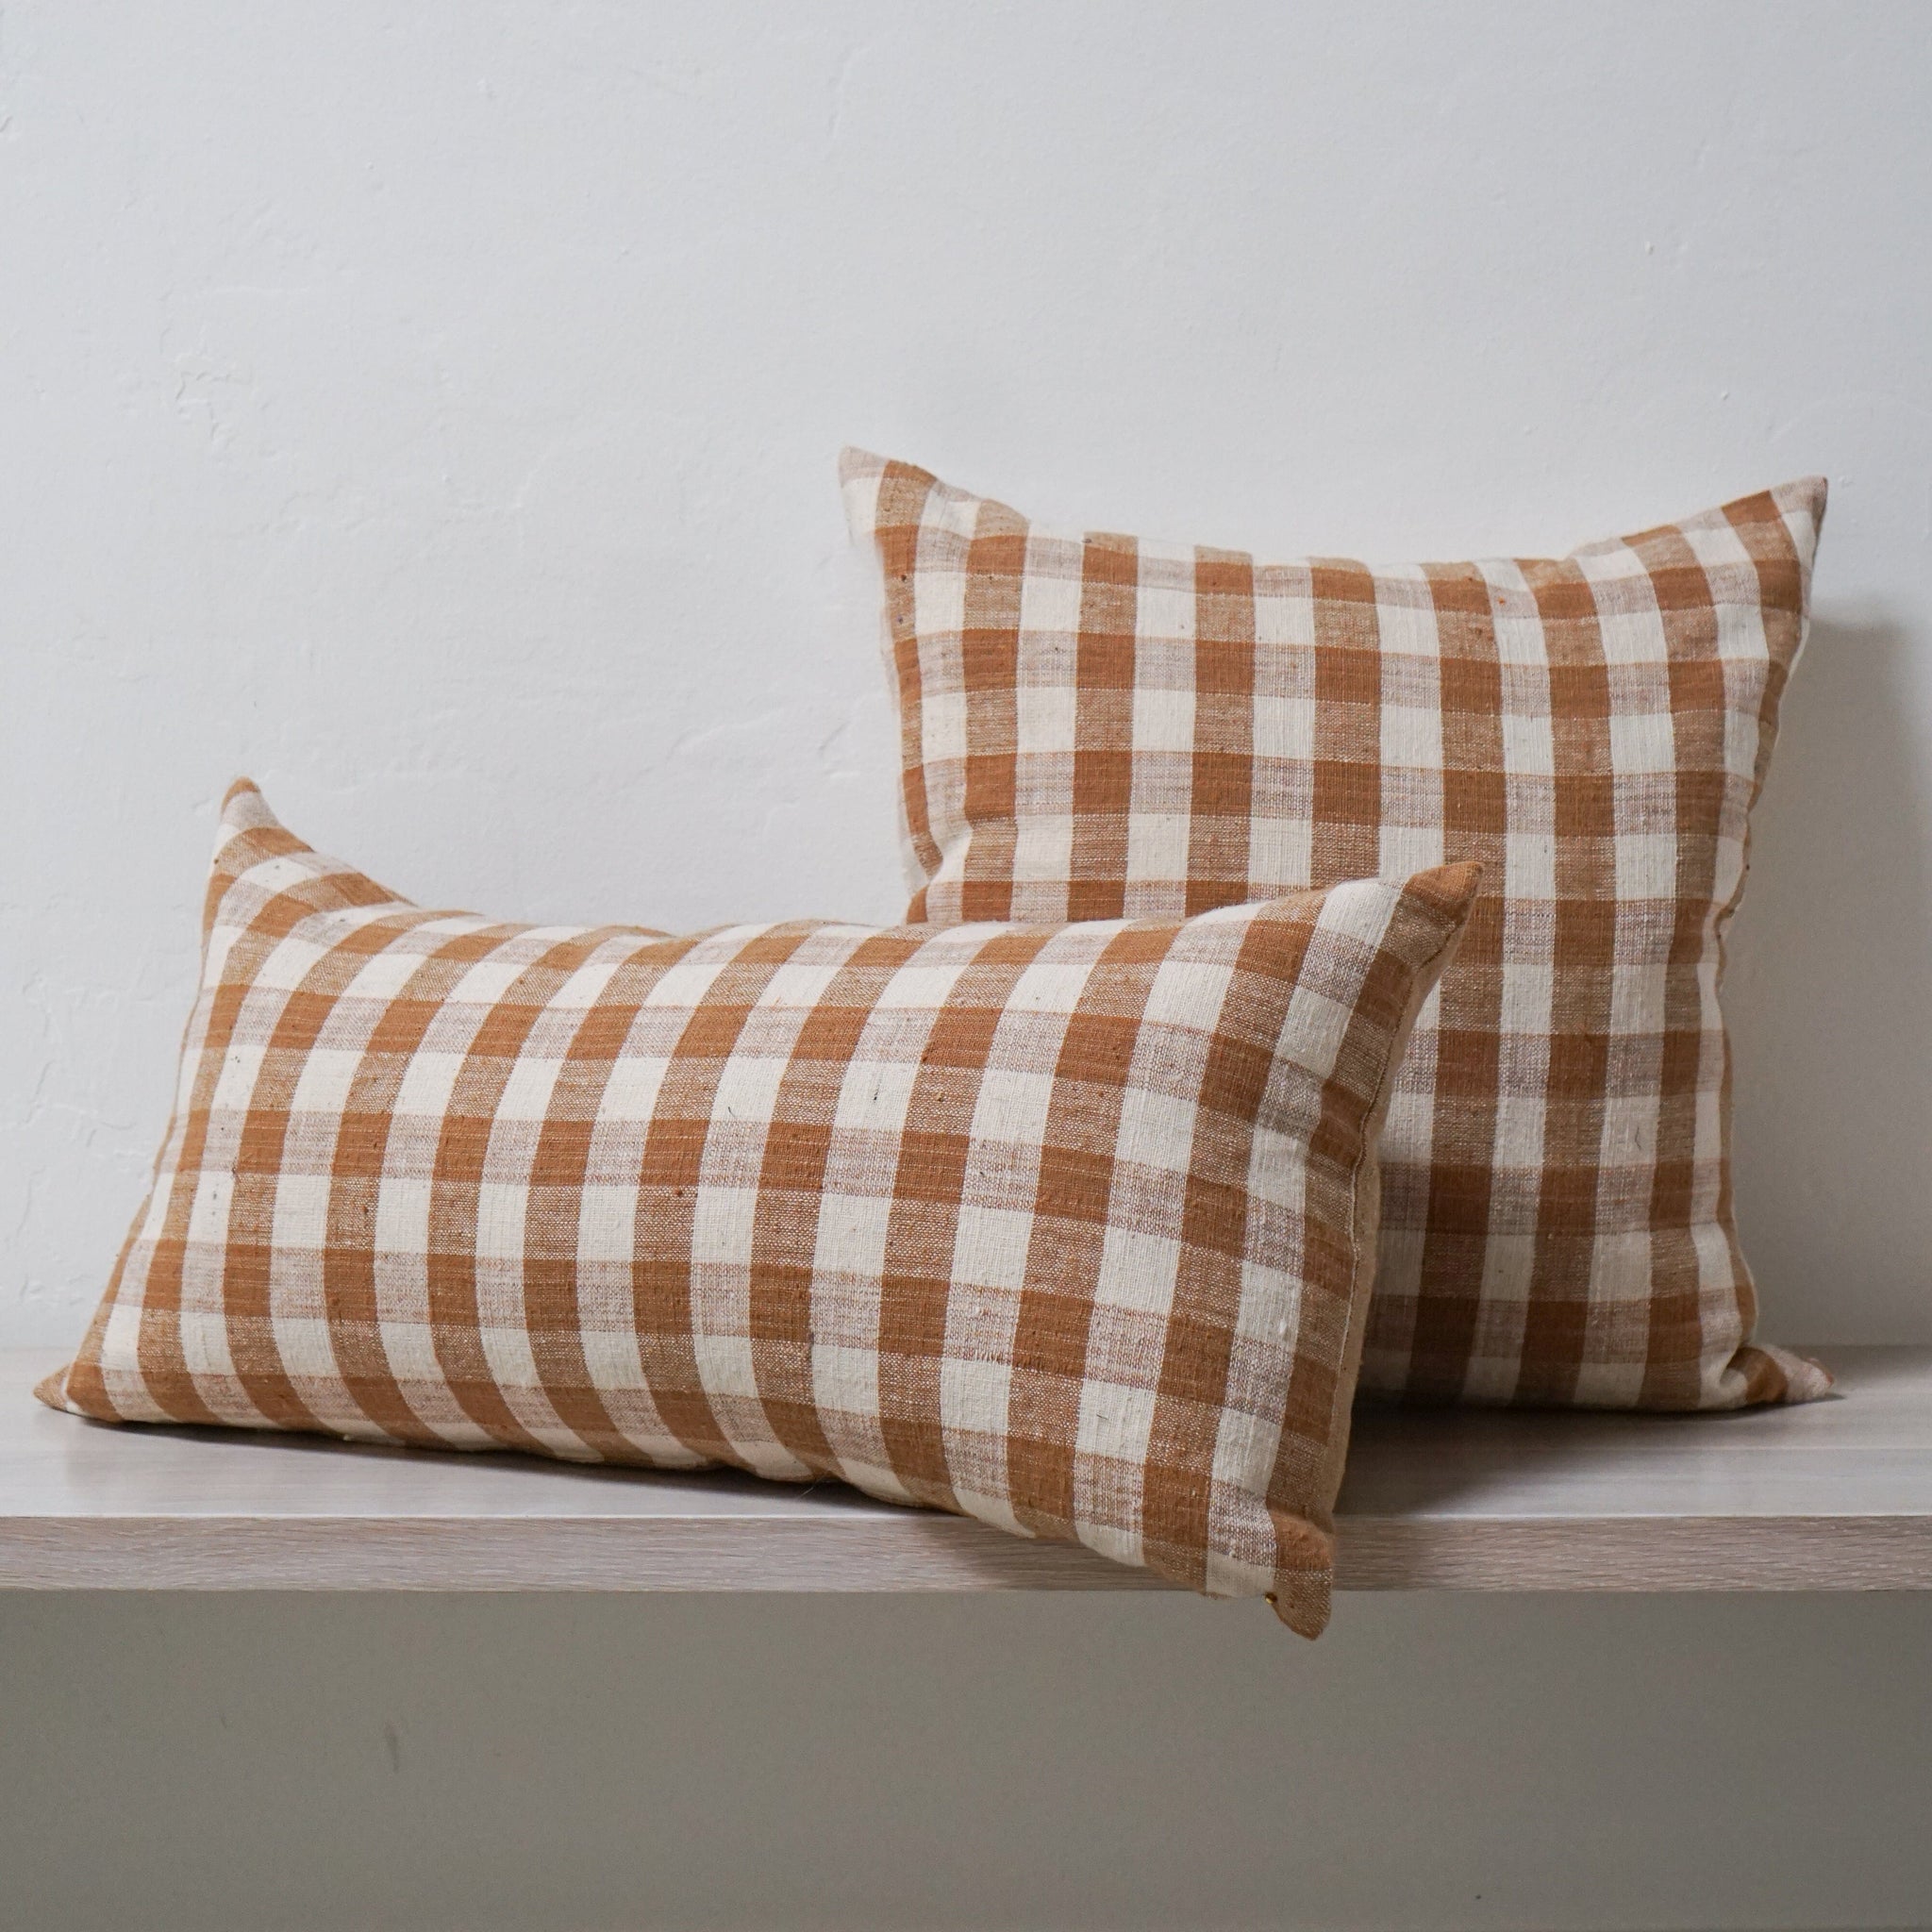 Lineage Botanica Pillows 20" x 20" Cream and Rust Plaid Linen Pillows - 21.5 x 21.5